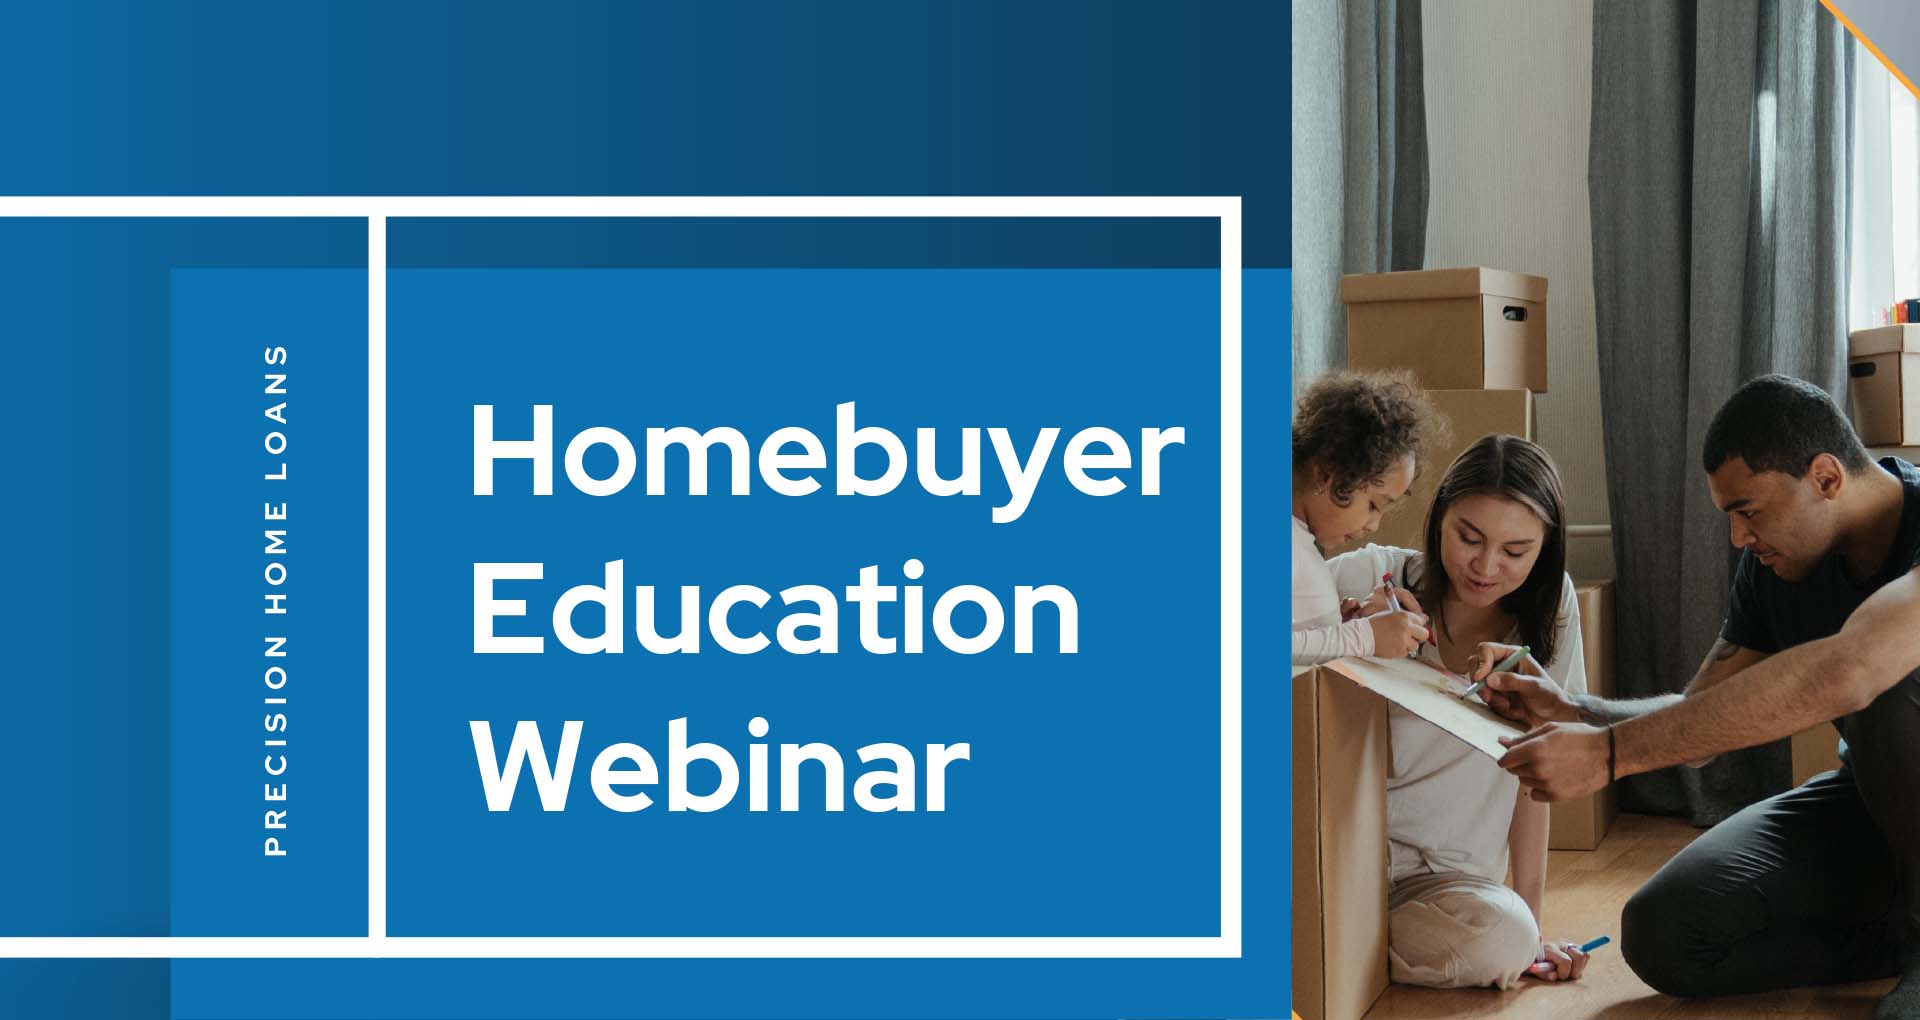 Homebuyer Education Webinar